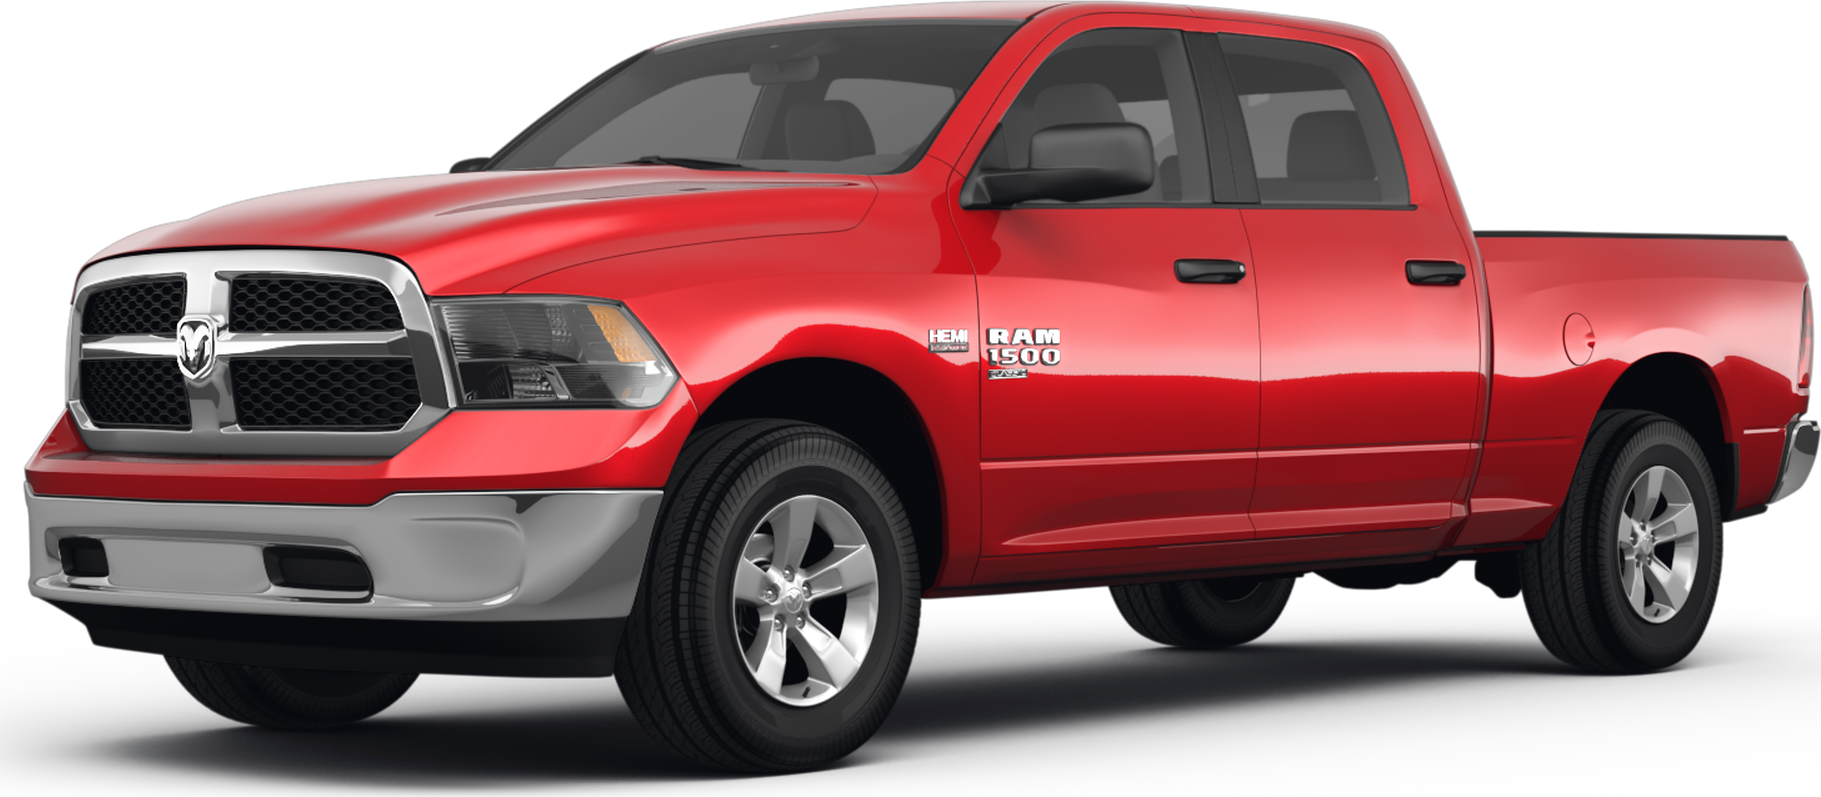 2009 Dodge Ram 1500 Crew Cab Price, Value, Ratings & Reviews